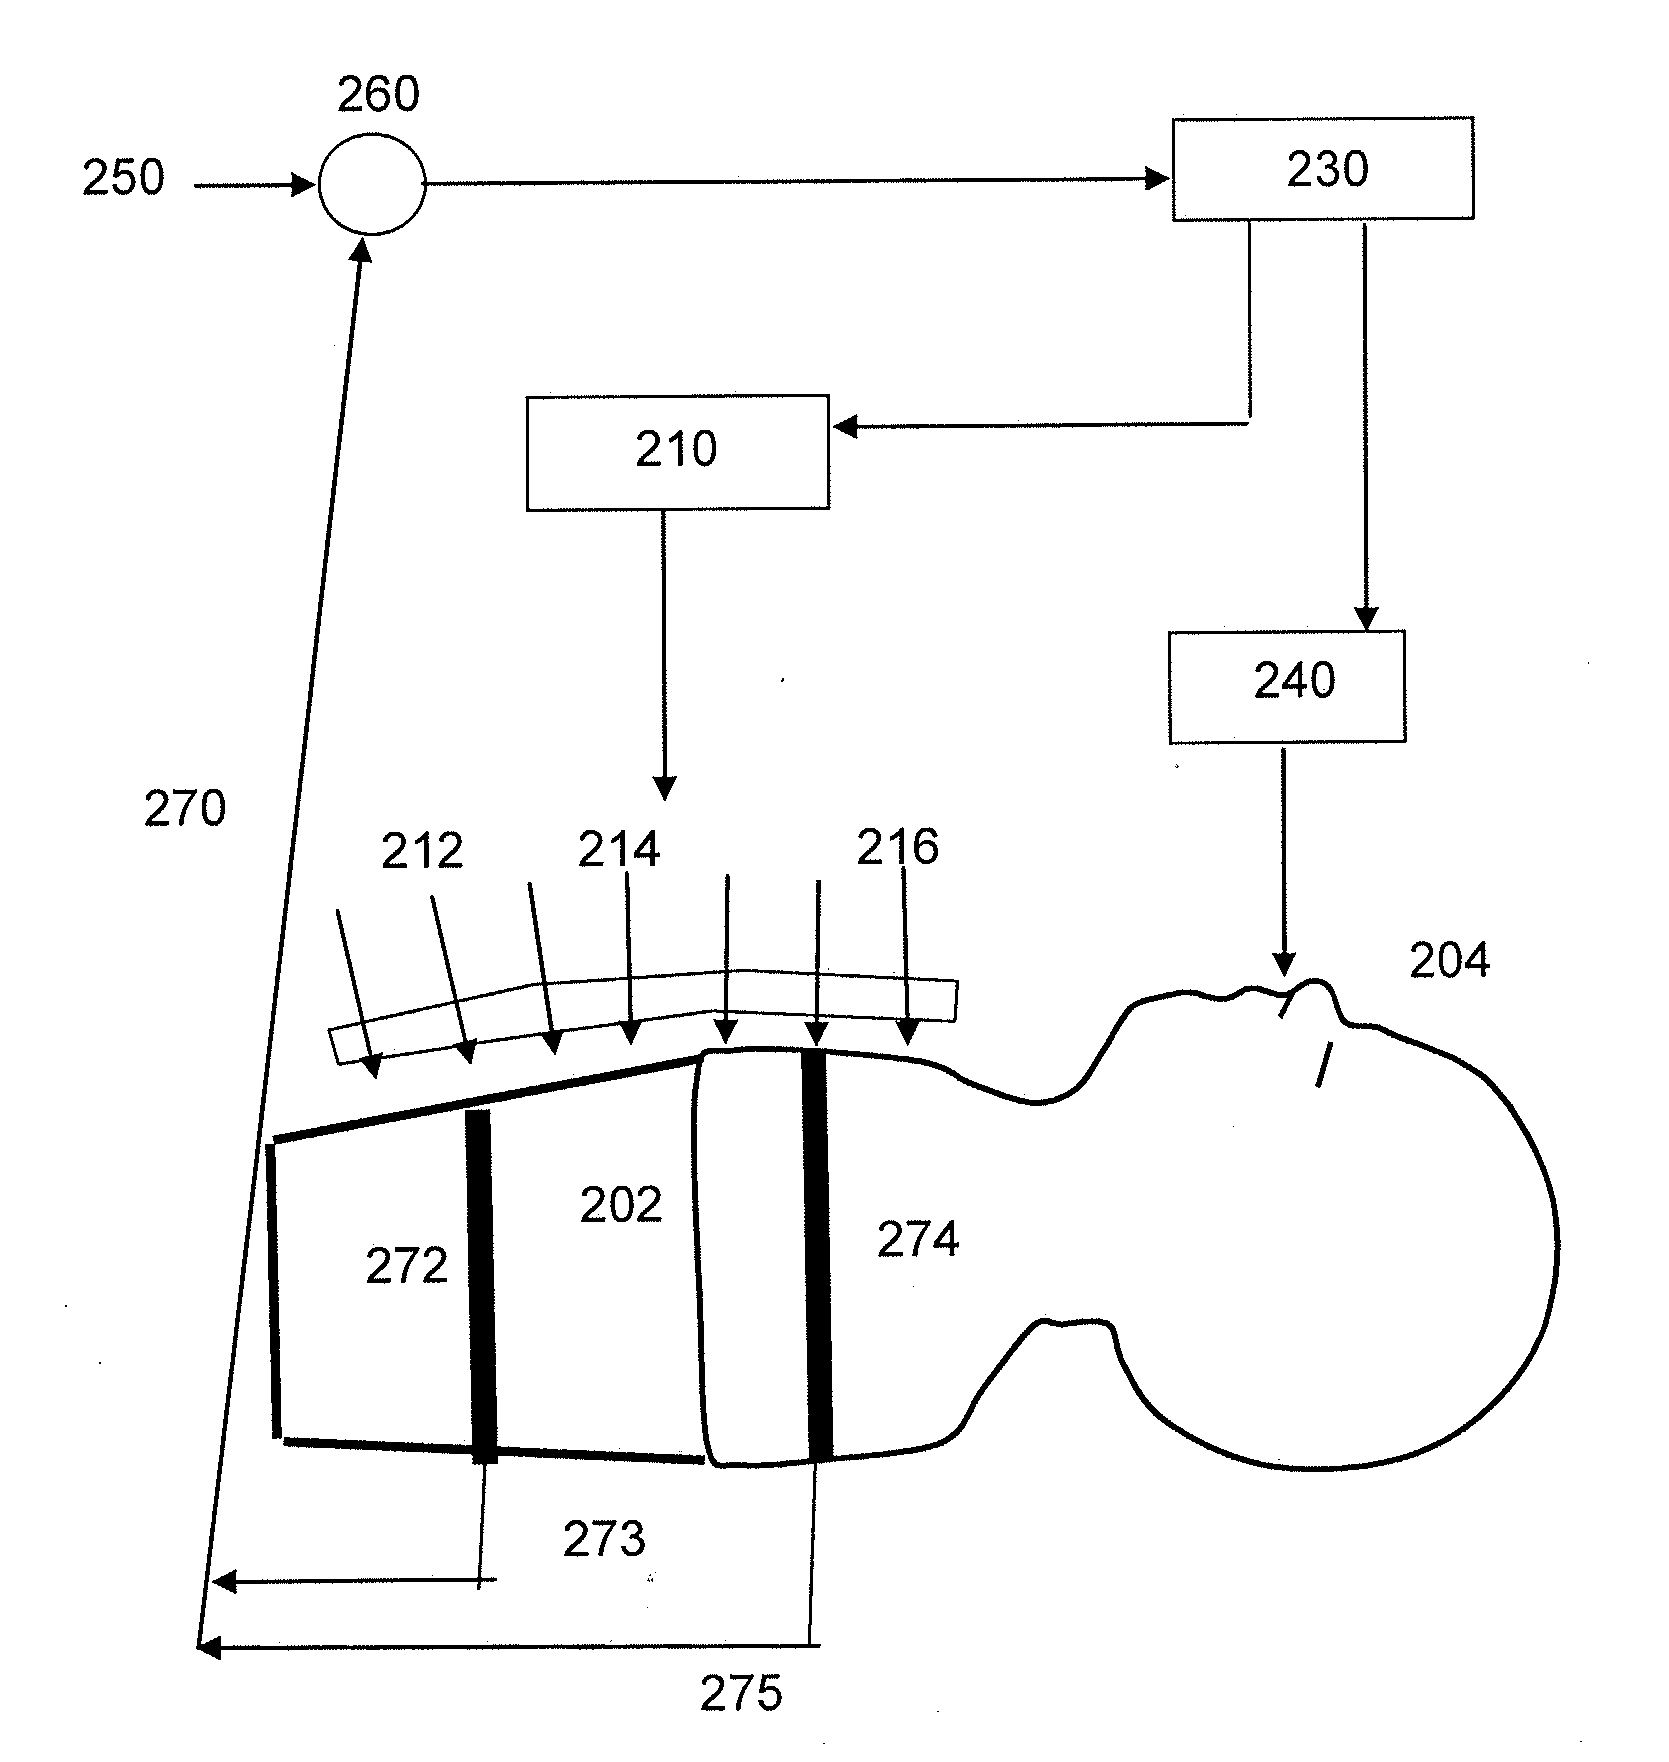 Extrathoracic Augmentation of the Respiratory Pump